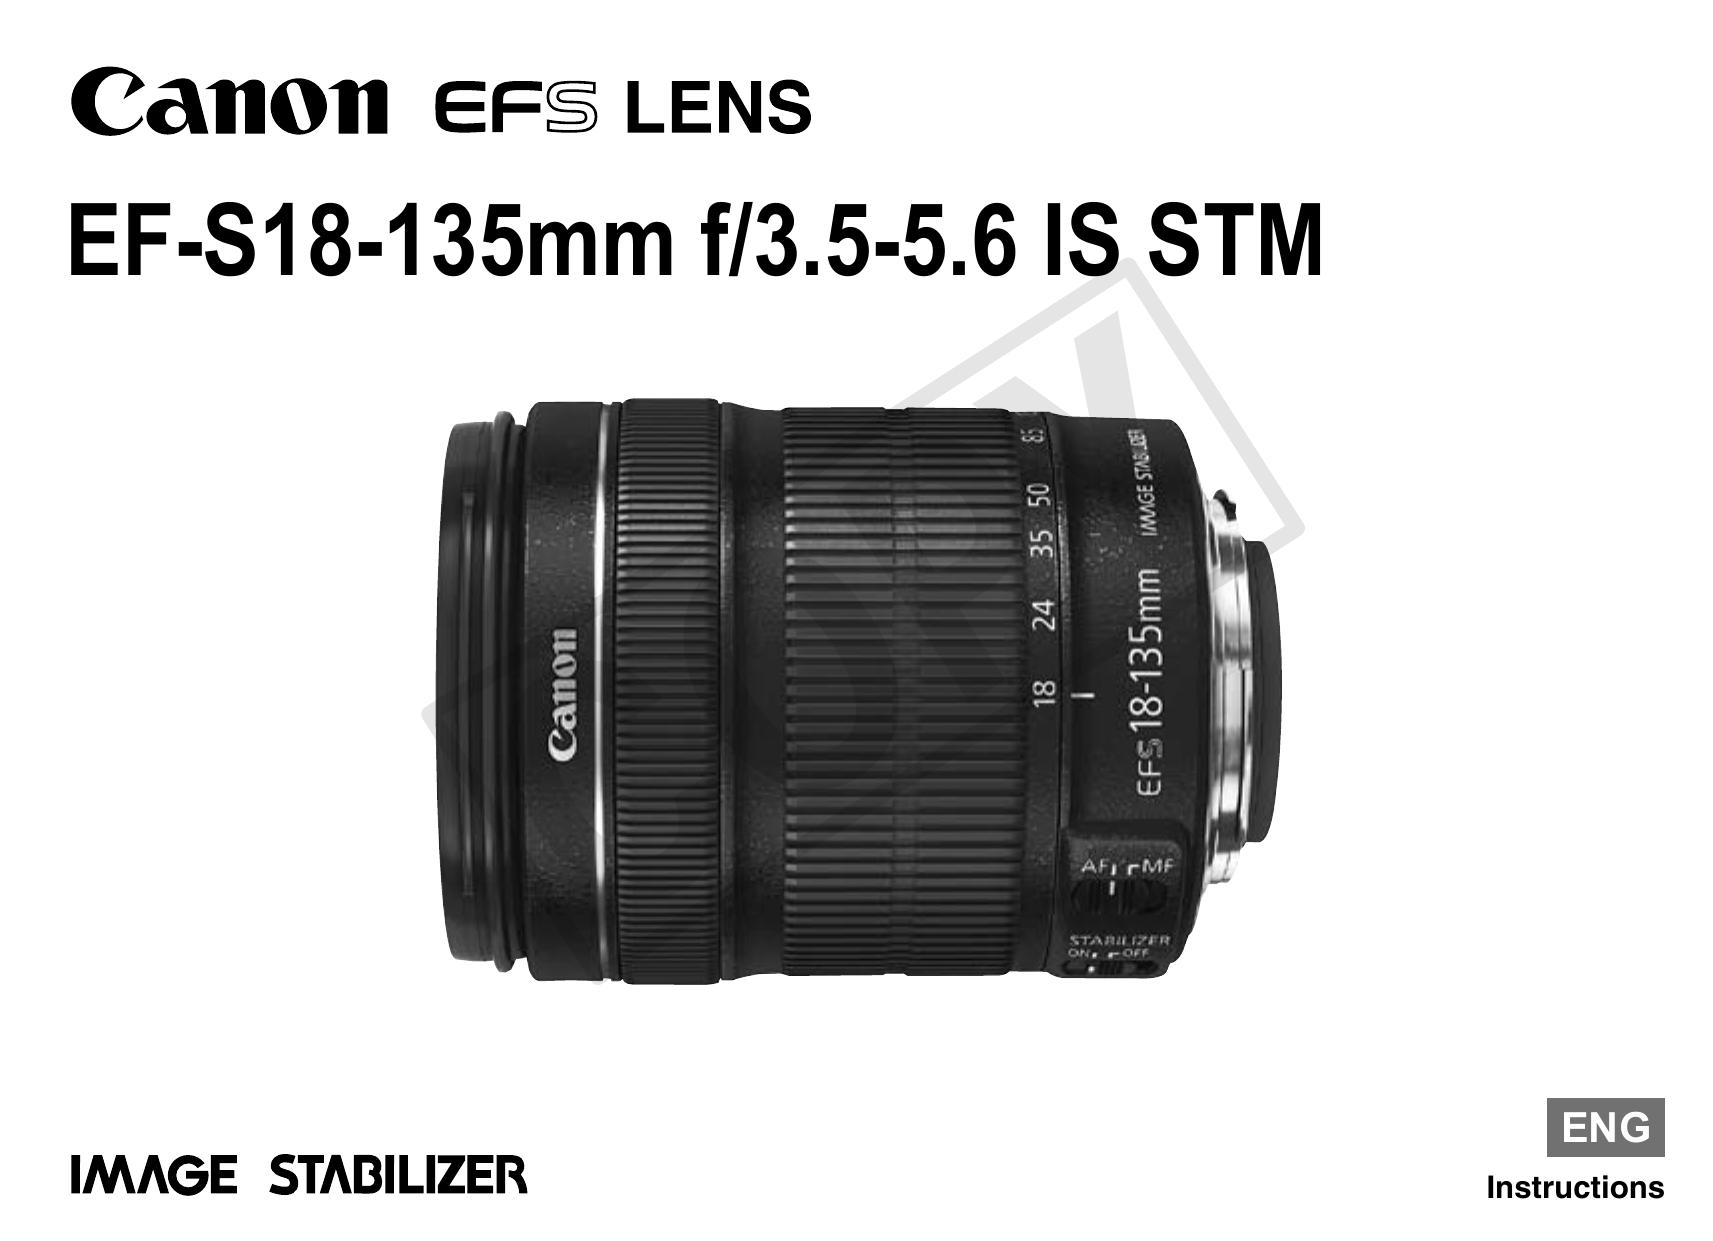 Canon 18-135mm f/3.5-5.6 STM Camera Lens User Manual